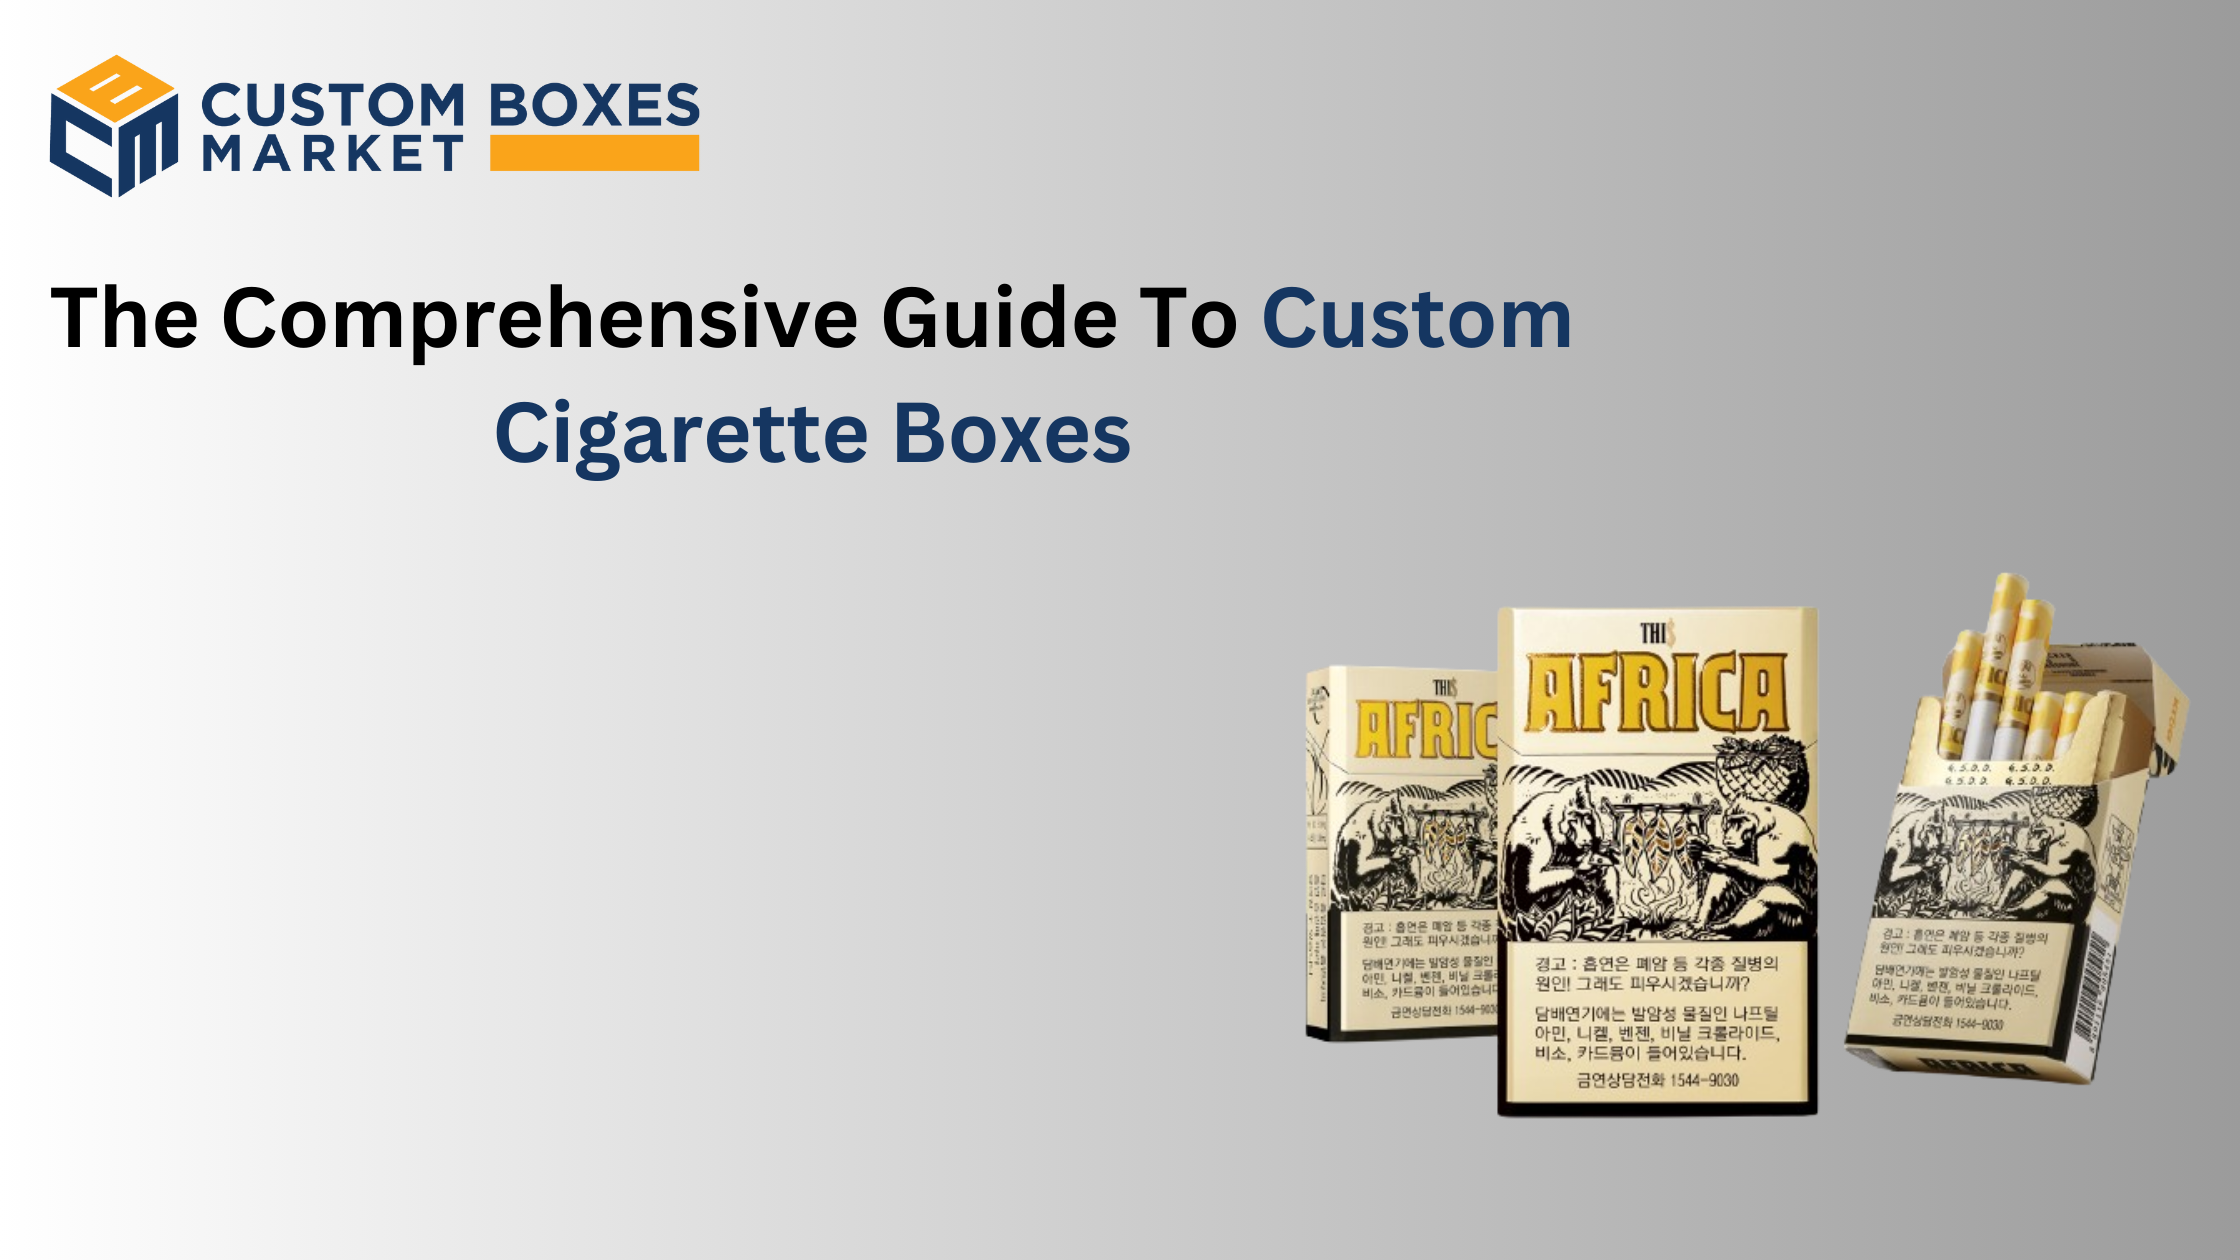 The Comprehensive Guide To Custom Cigarette Boxes